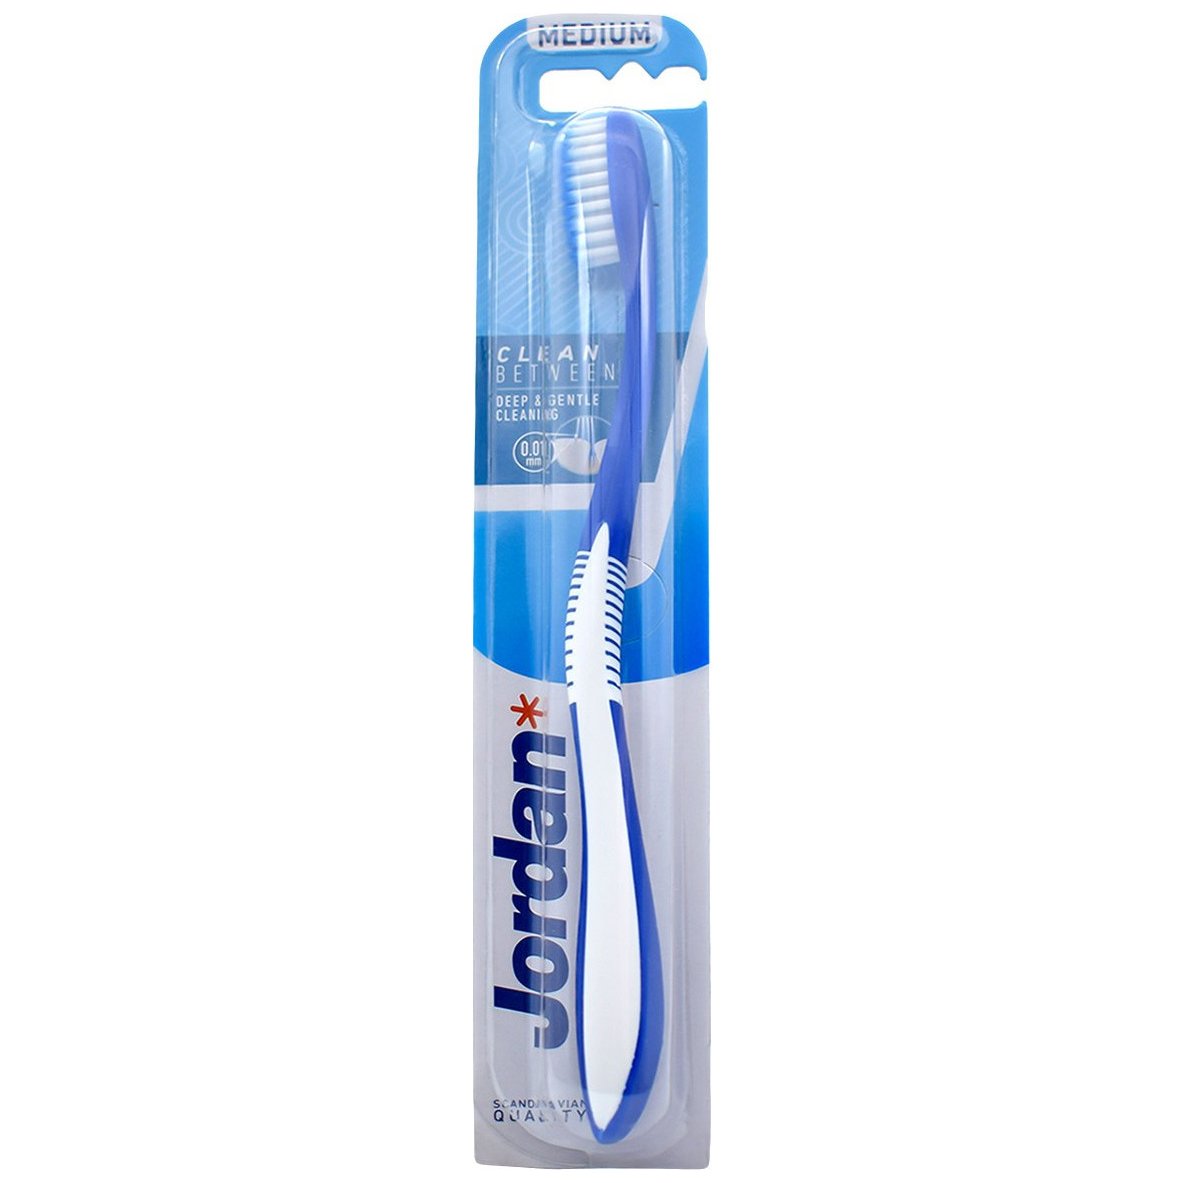 Jordan Clean Between Toothbrush Medium 0.01mm Μέτρια Οδοντόβουρτσα για Βαθύ Καθαρισμό με Εξαιρετικά Λεπτές Ίνες 1 Τεμάχιο, Κωδ 310035 – Μπλε